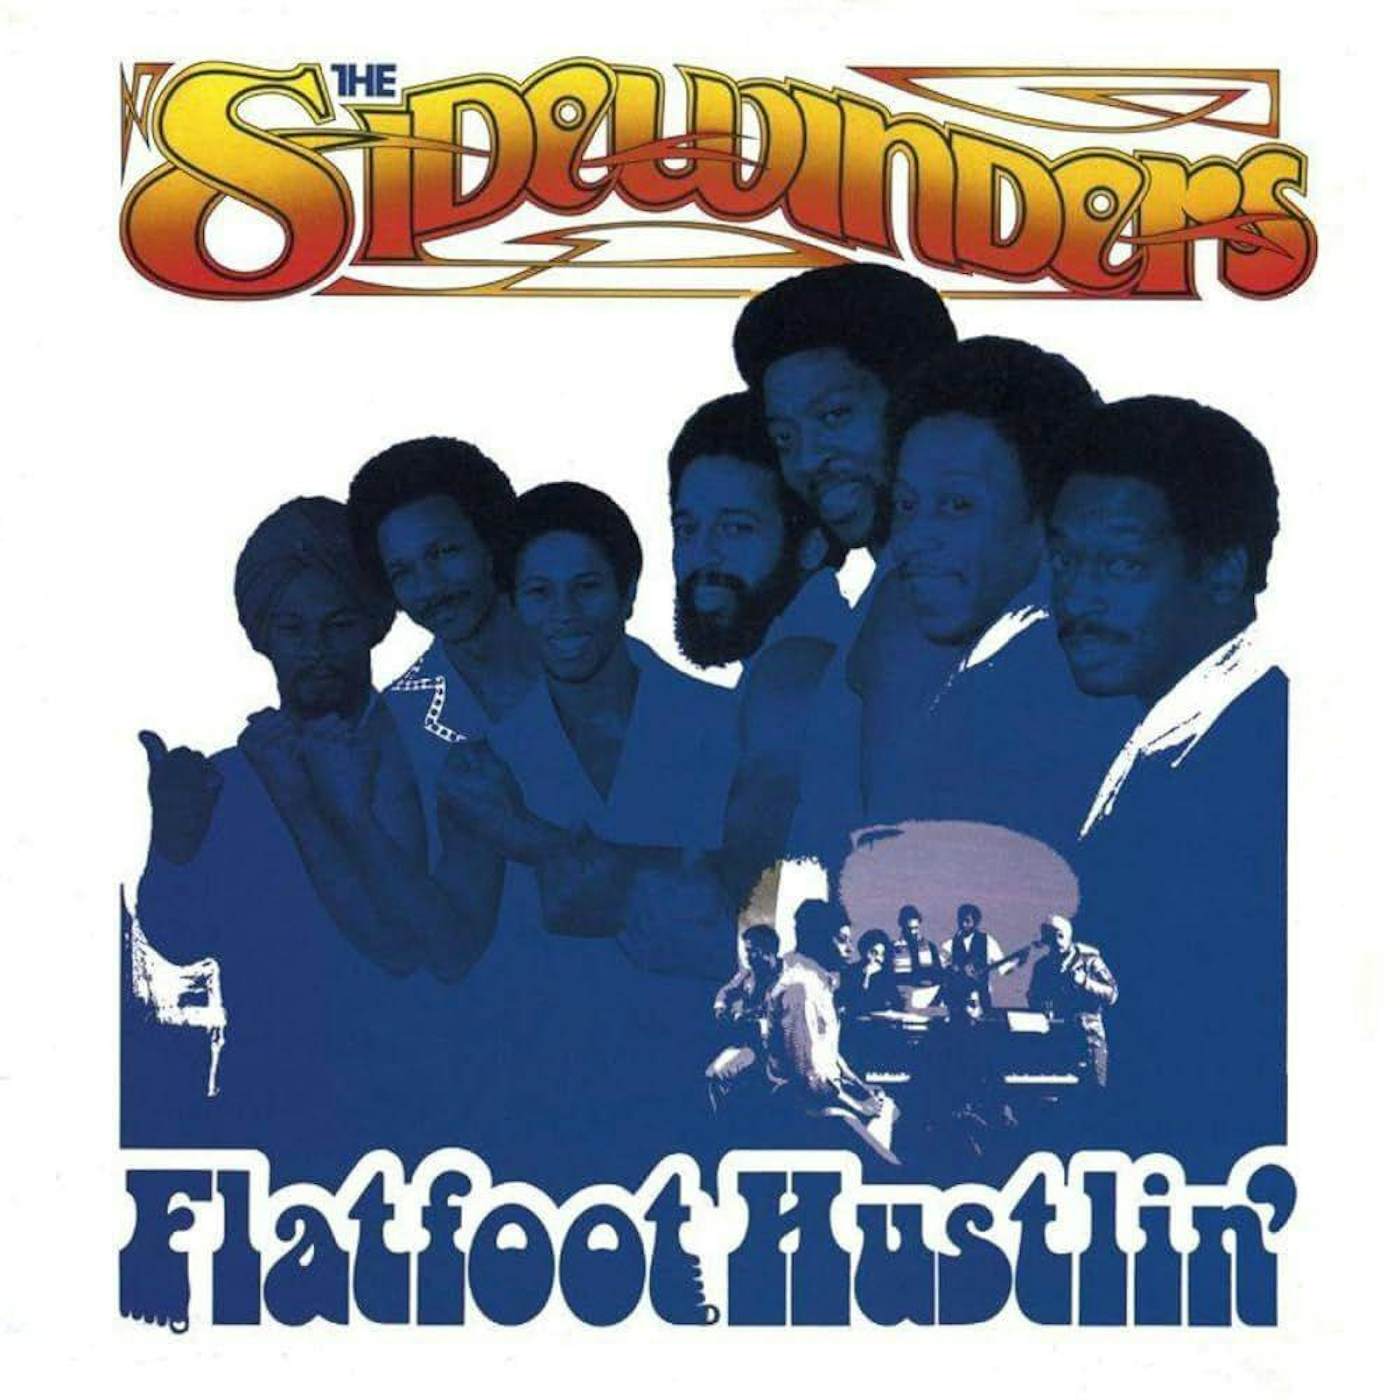 Sidewinders Flatfoot Hustlin' Vinyl Record